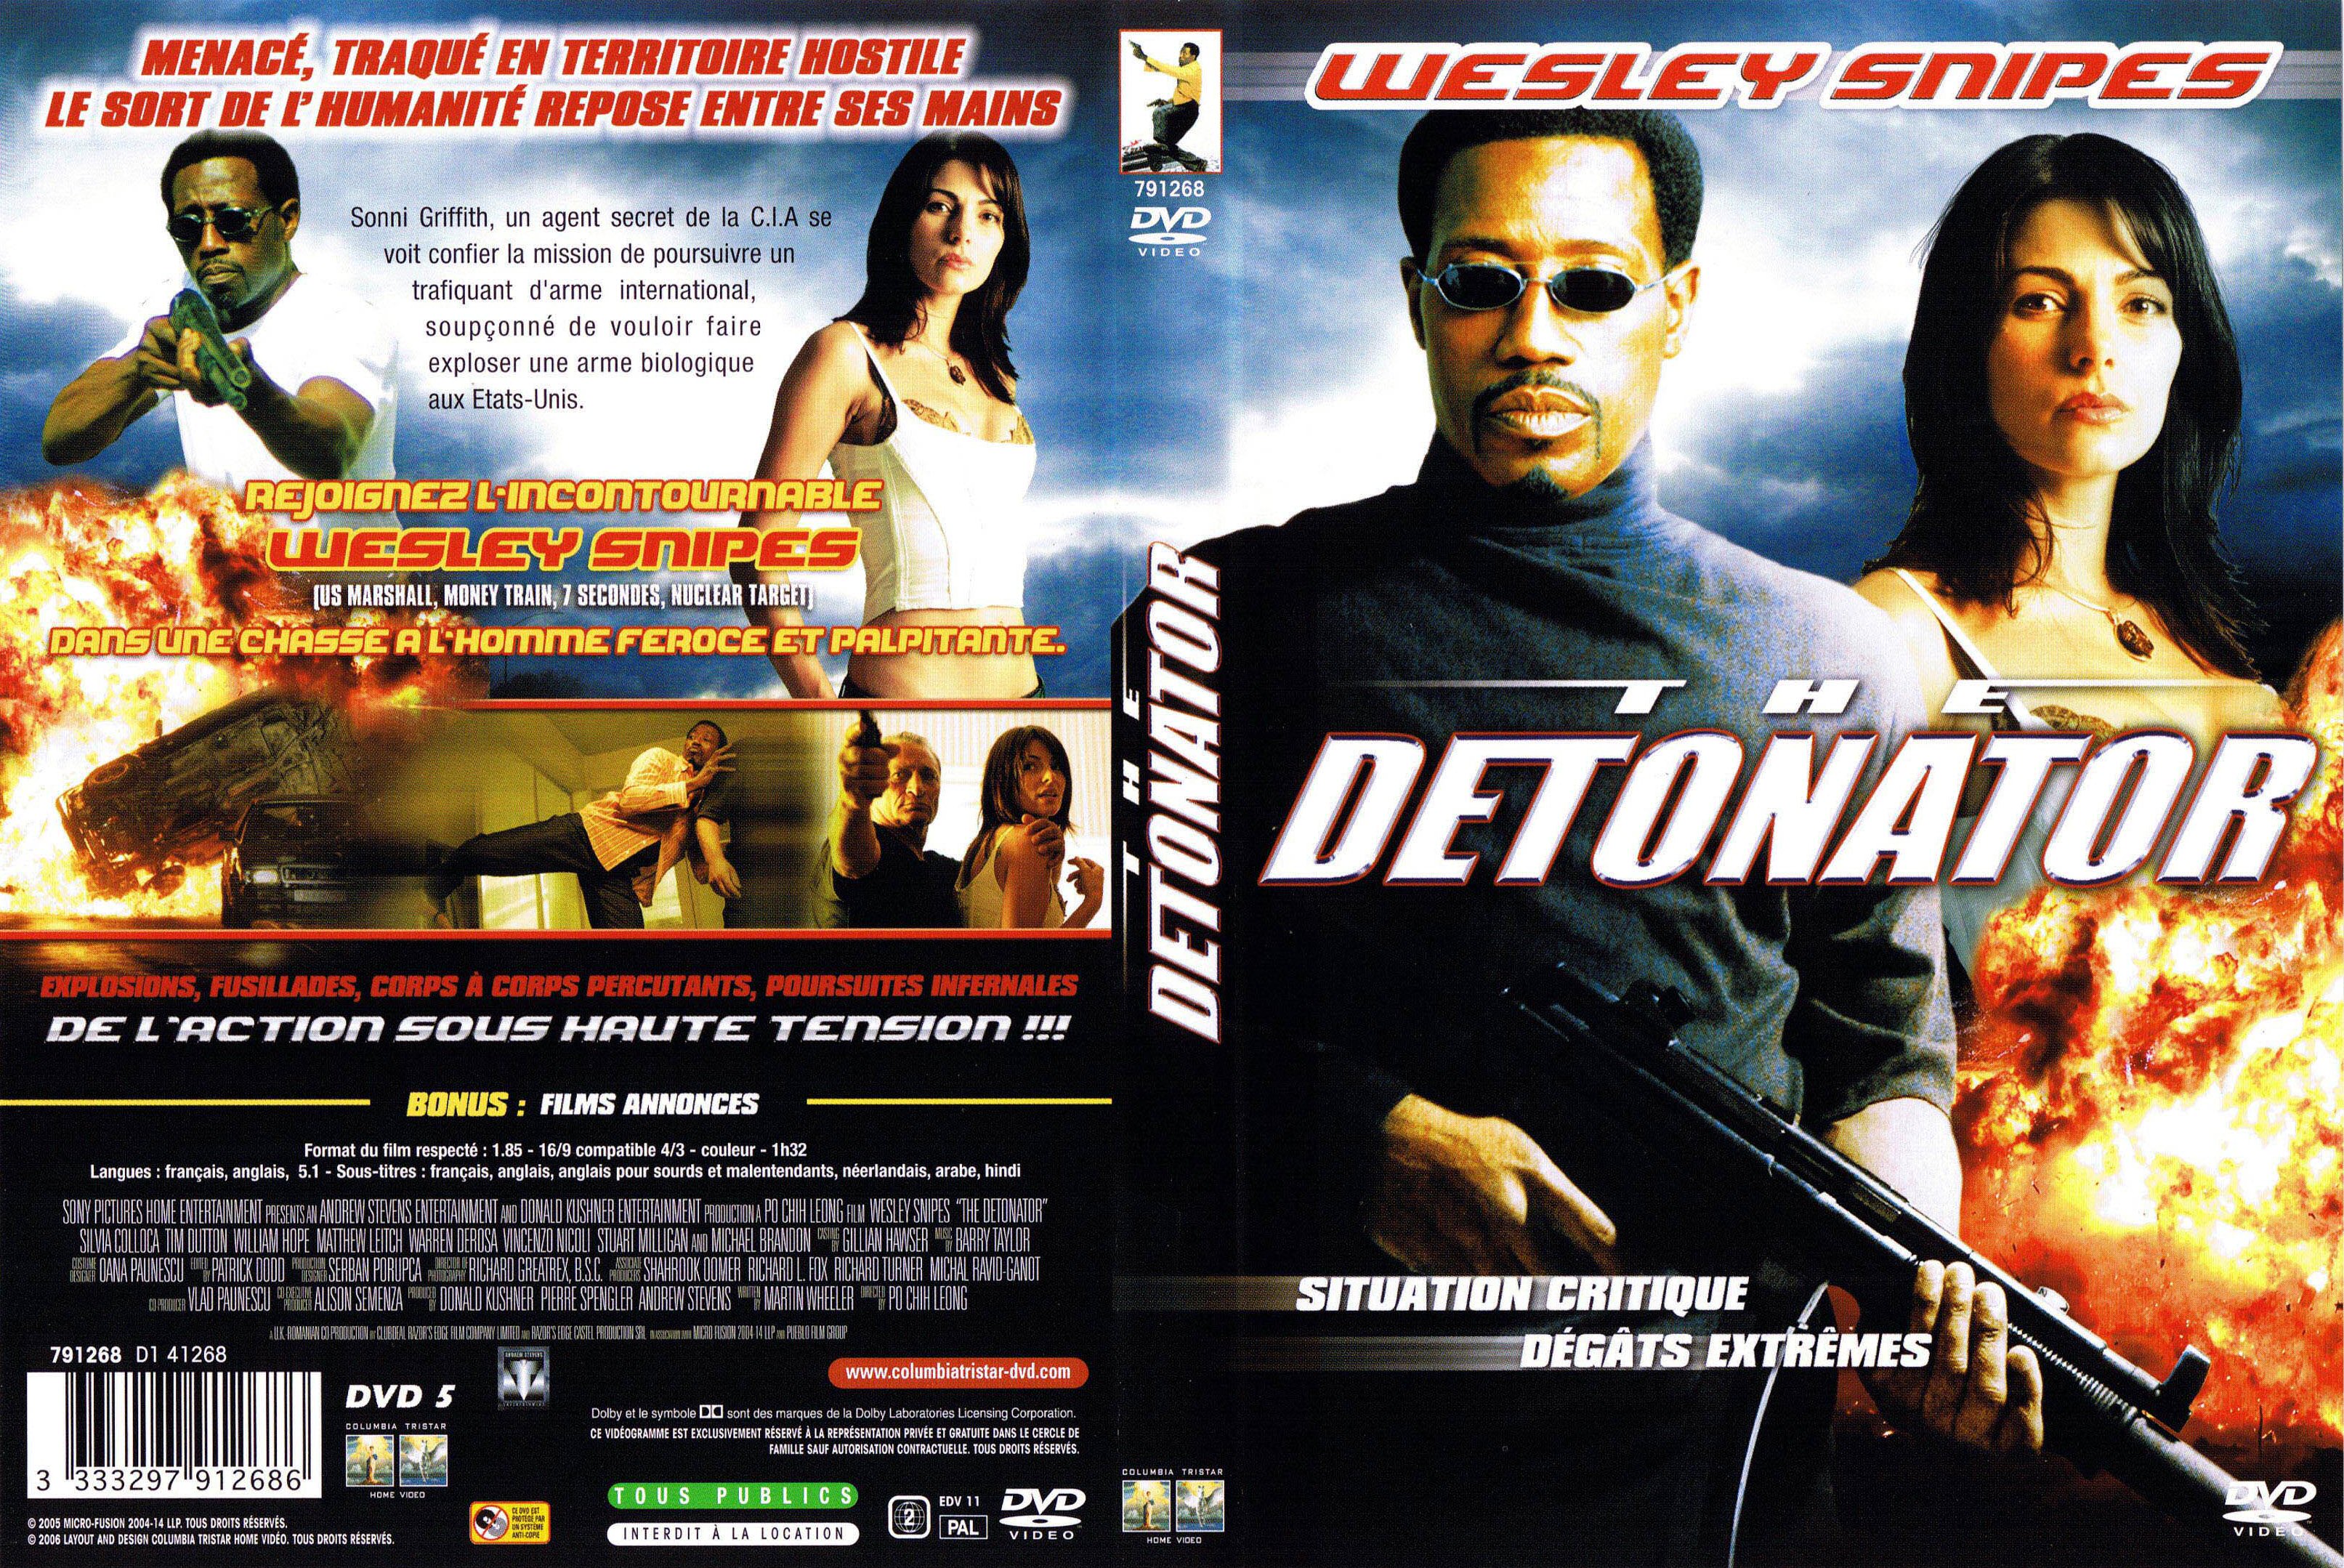 Jaquette DVD The detonator